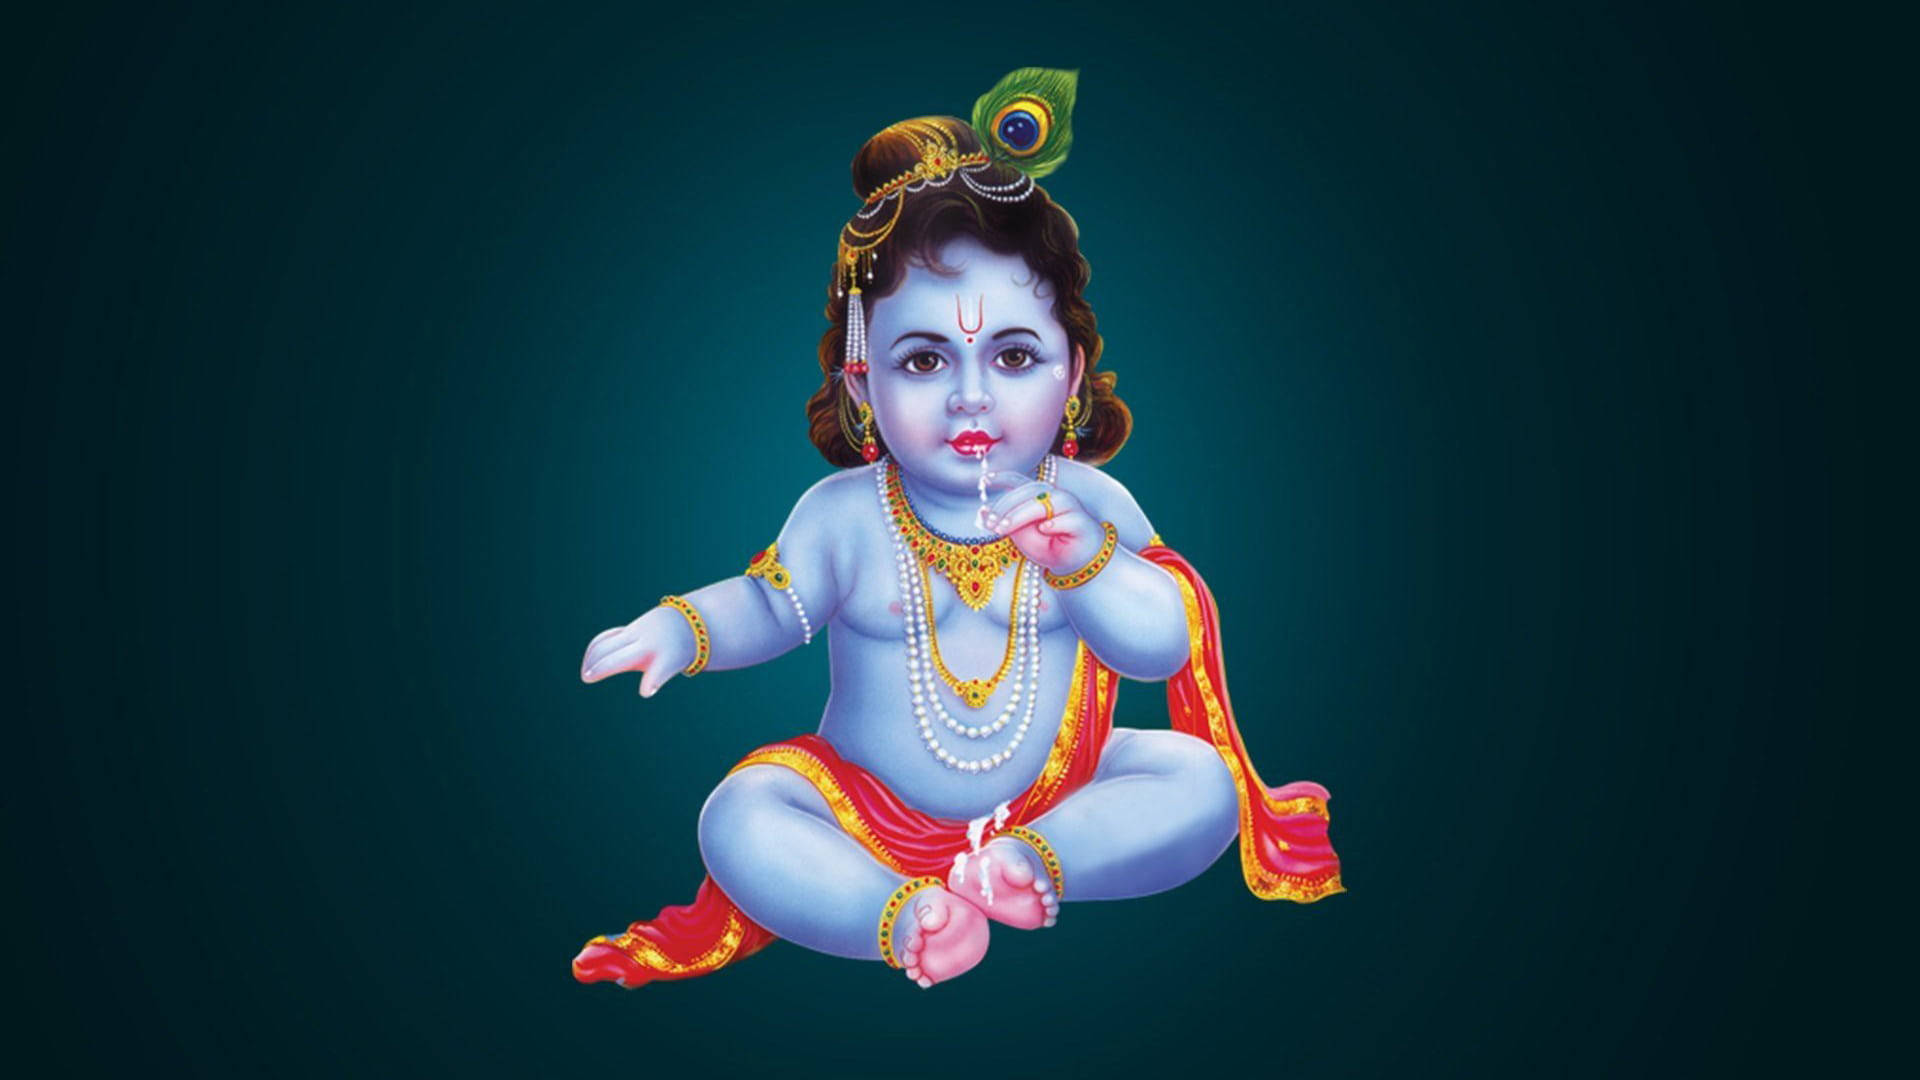 Baby Shri Krishna Against Emerald Background